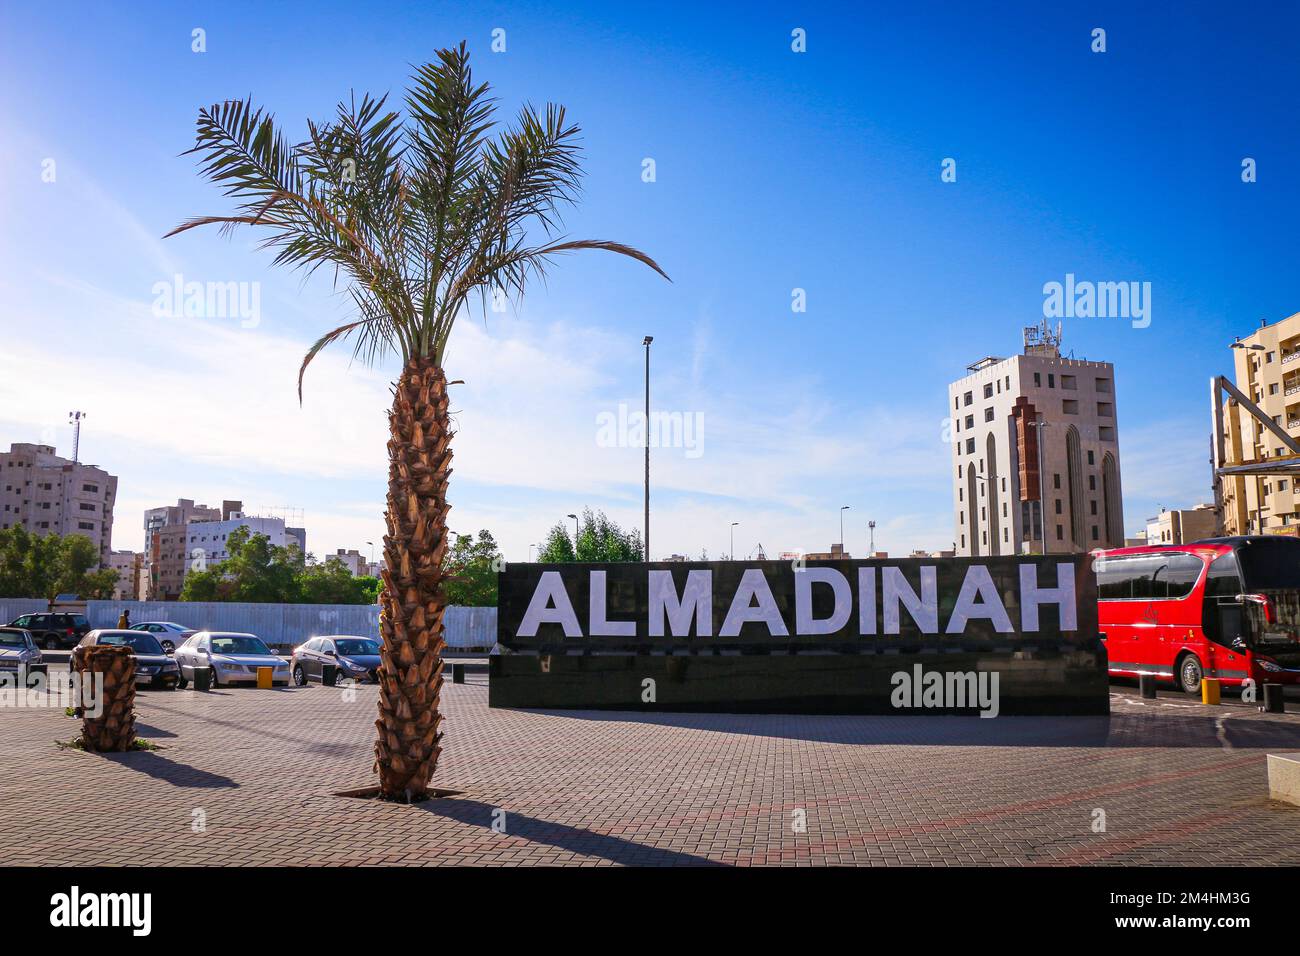 Medina , Saudi Arabia - Dec 13 2019 - Medina city landmark Sign Stock Photo